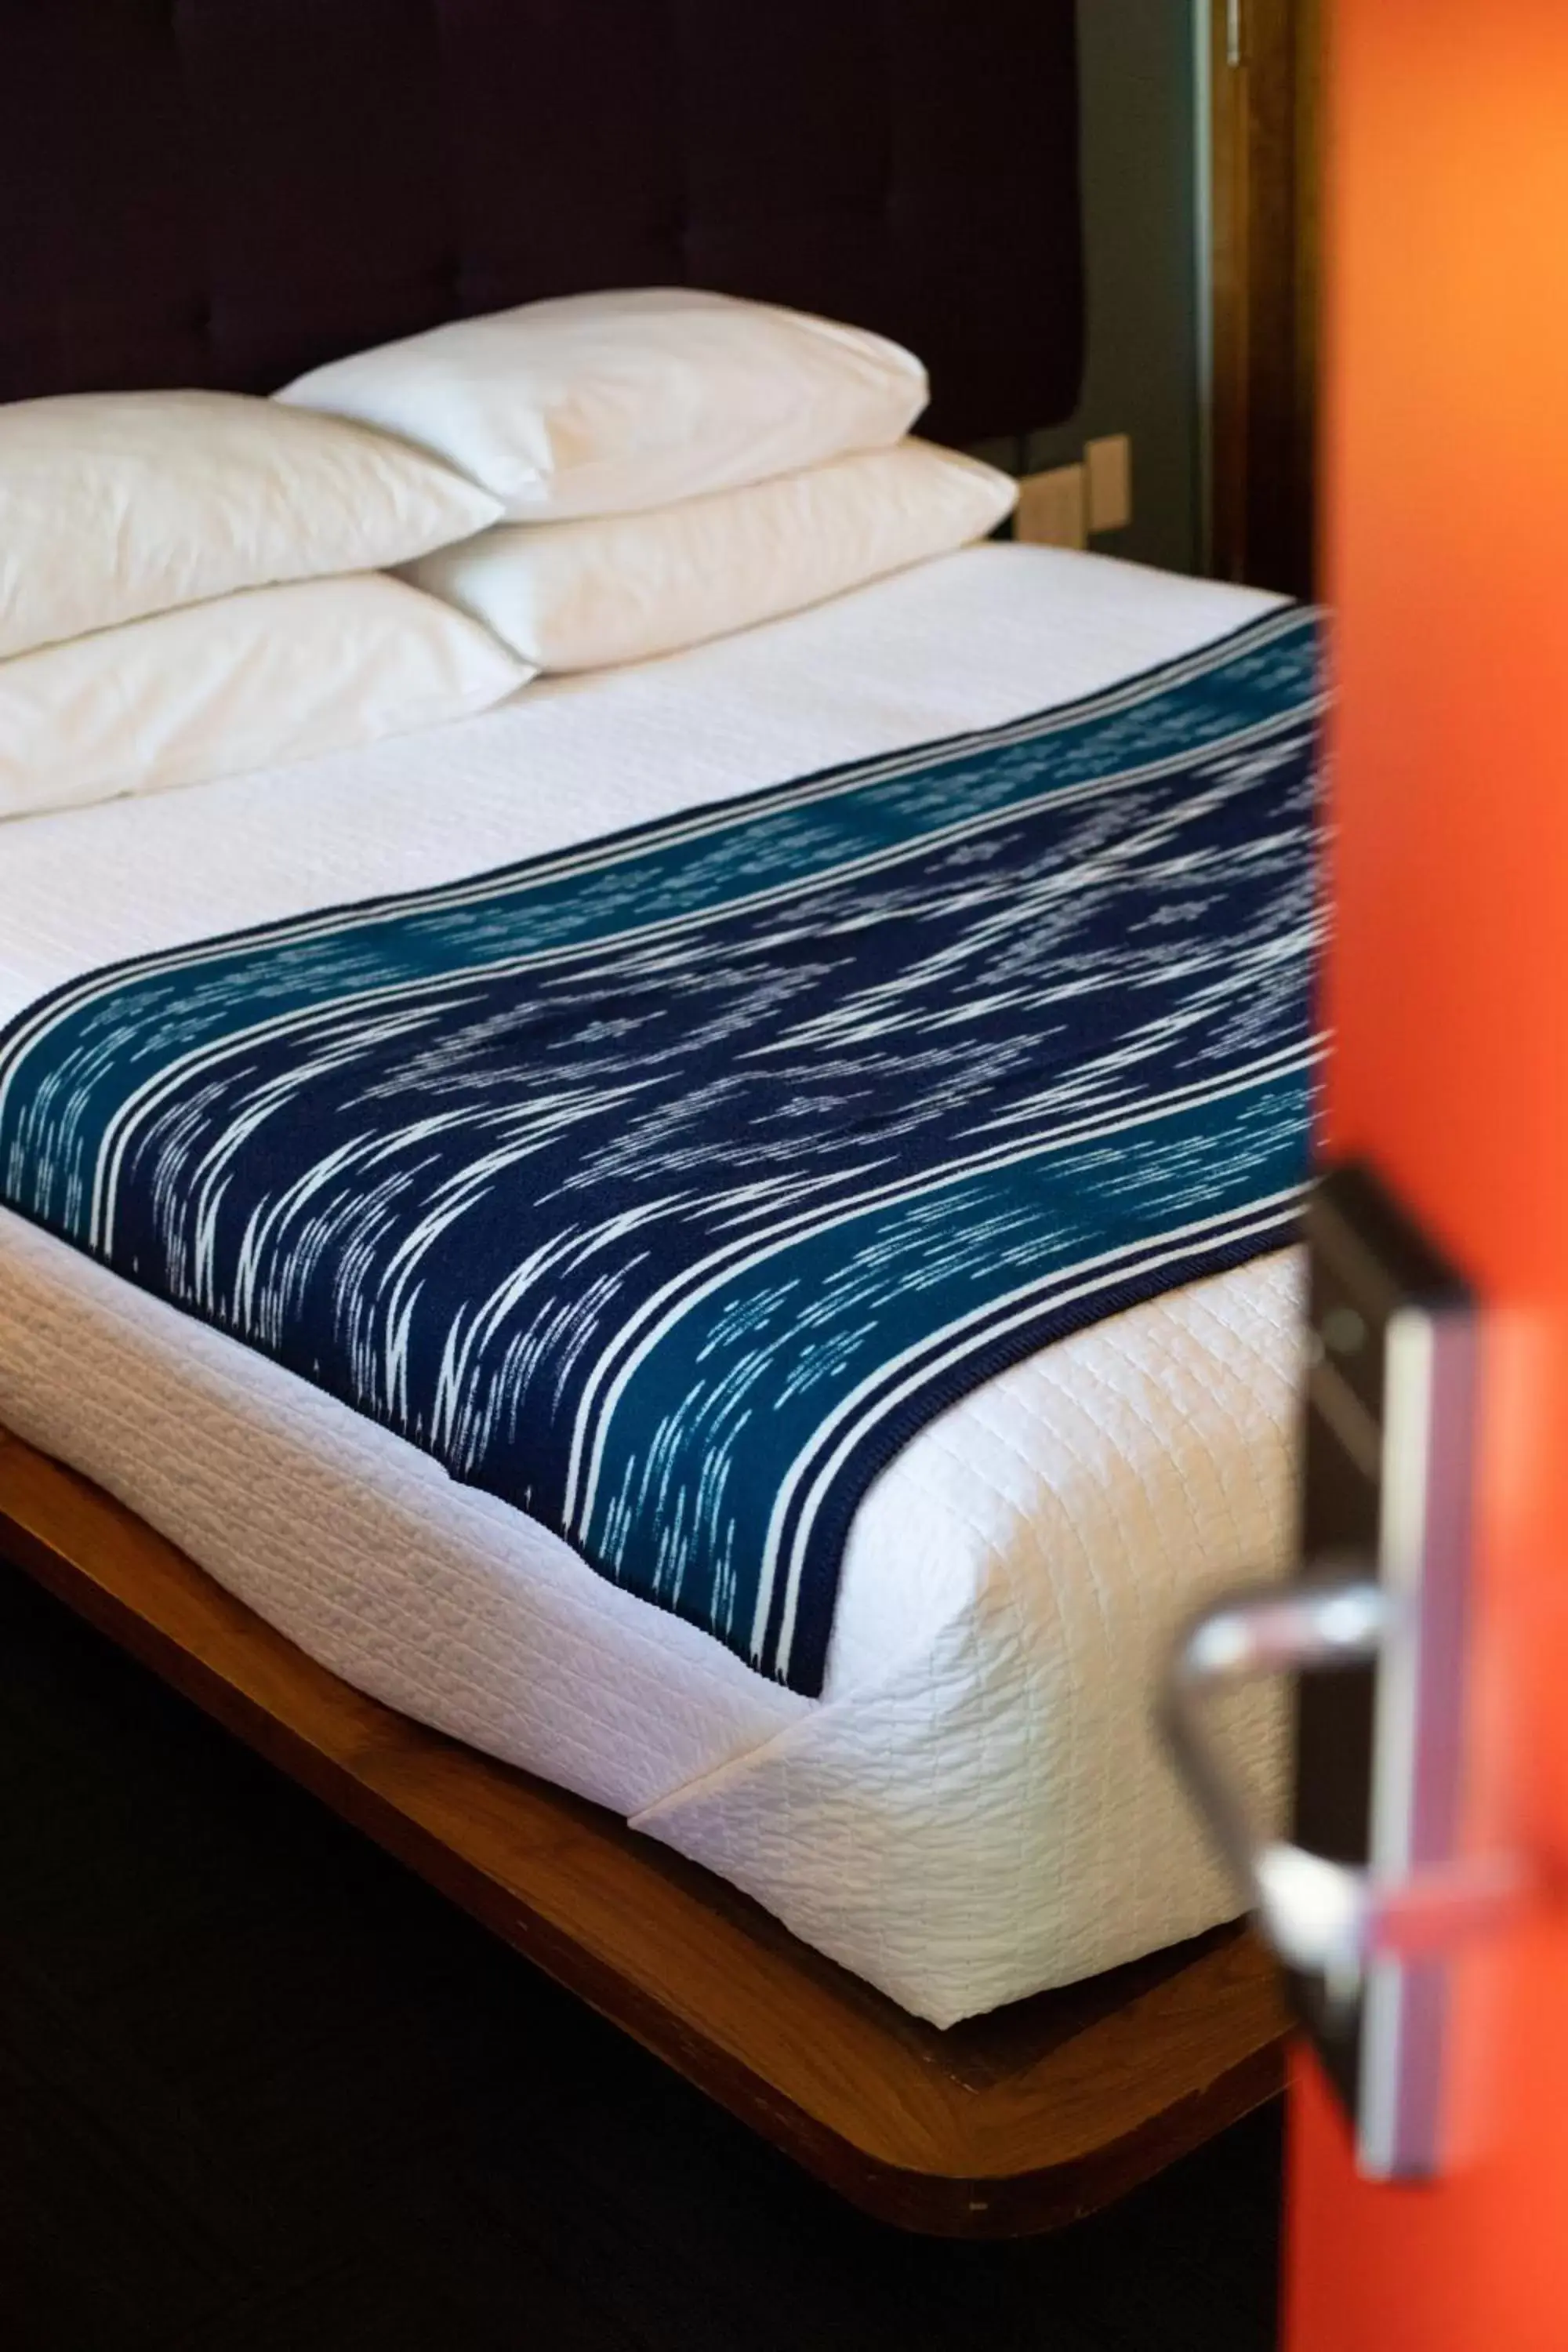 Bed in Modern Hotel